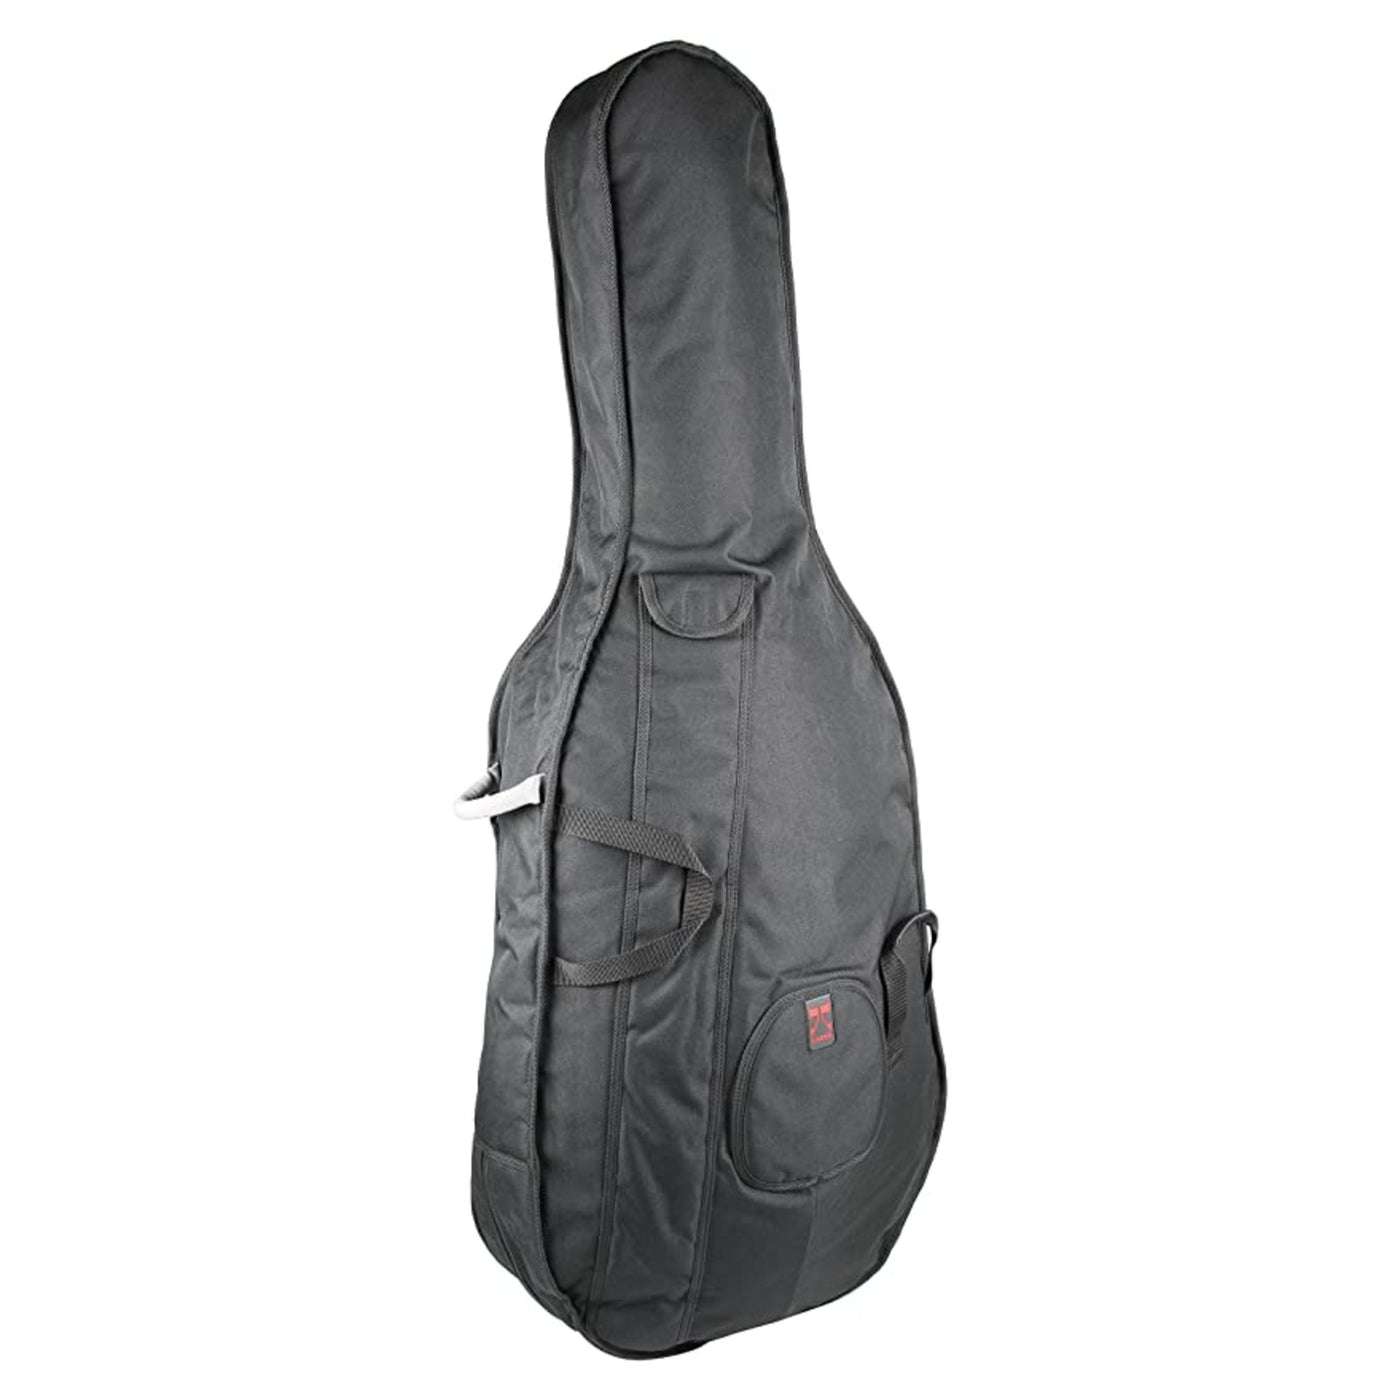 Kaces University Series 1/2 Size Cello Bag